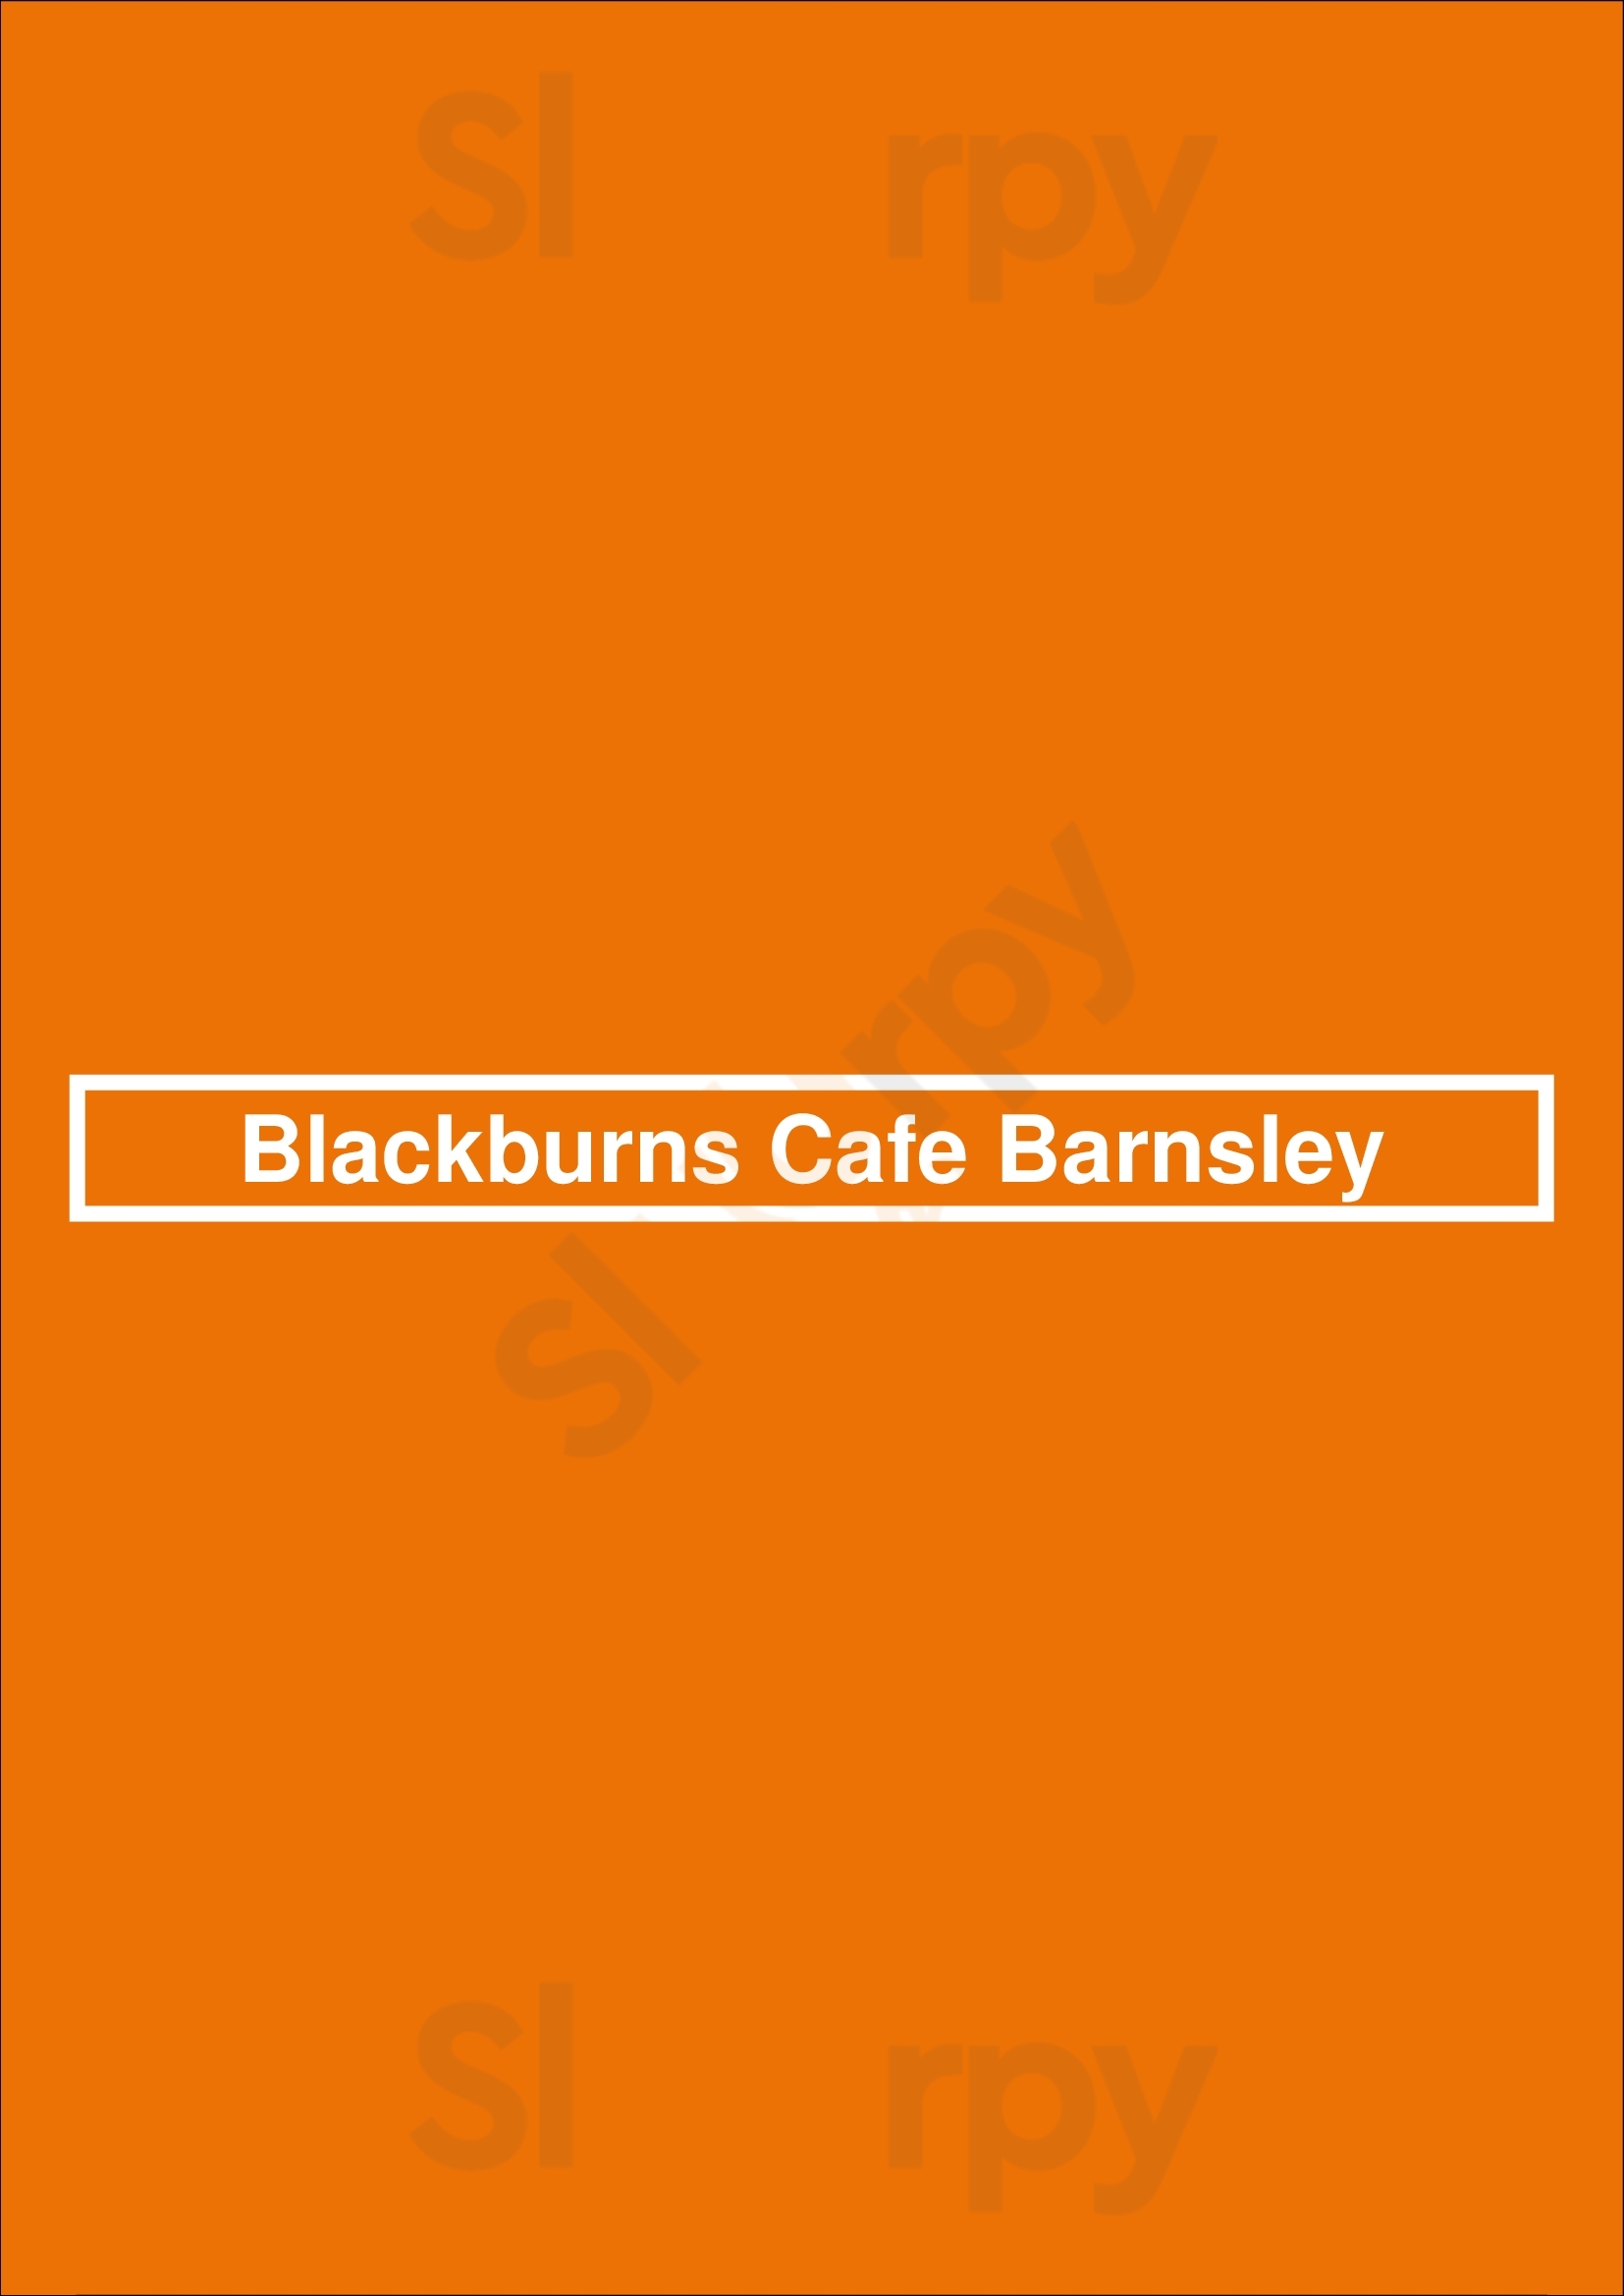 Blackburns Cafe Barnsley Barnsley Menu - 1